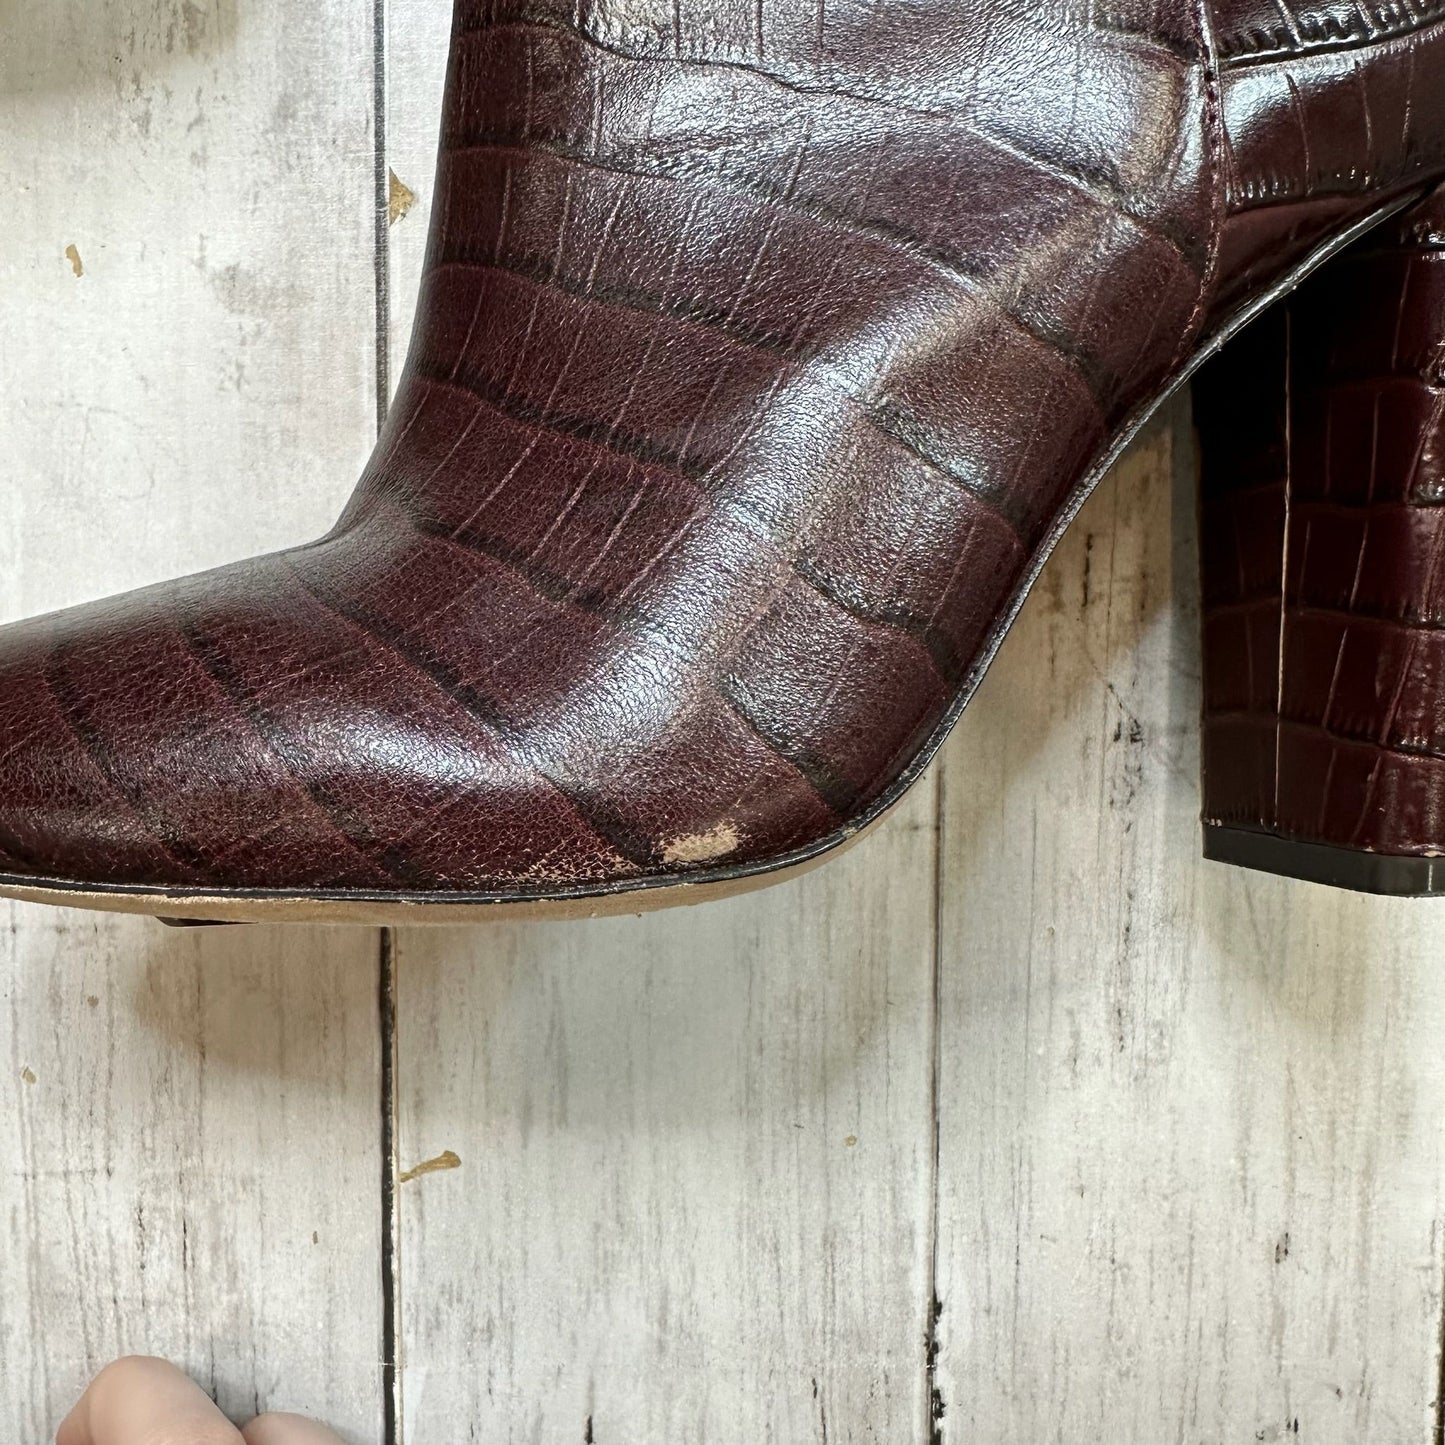 Boots Knee Heels By Antonio Melani  Size: 8.5